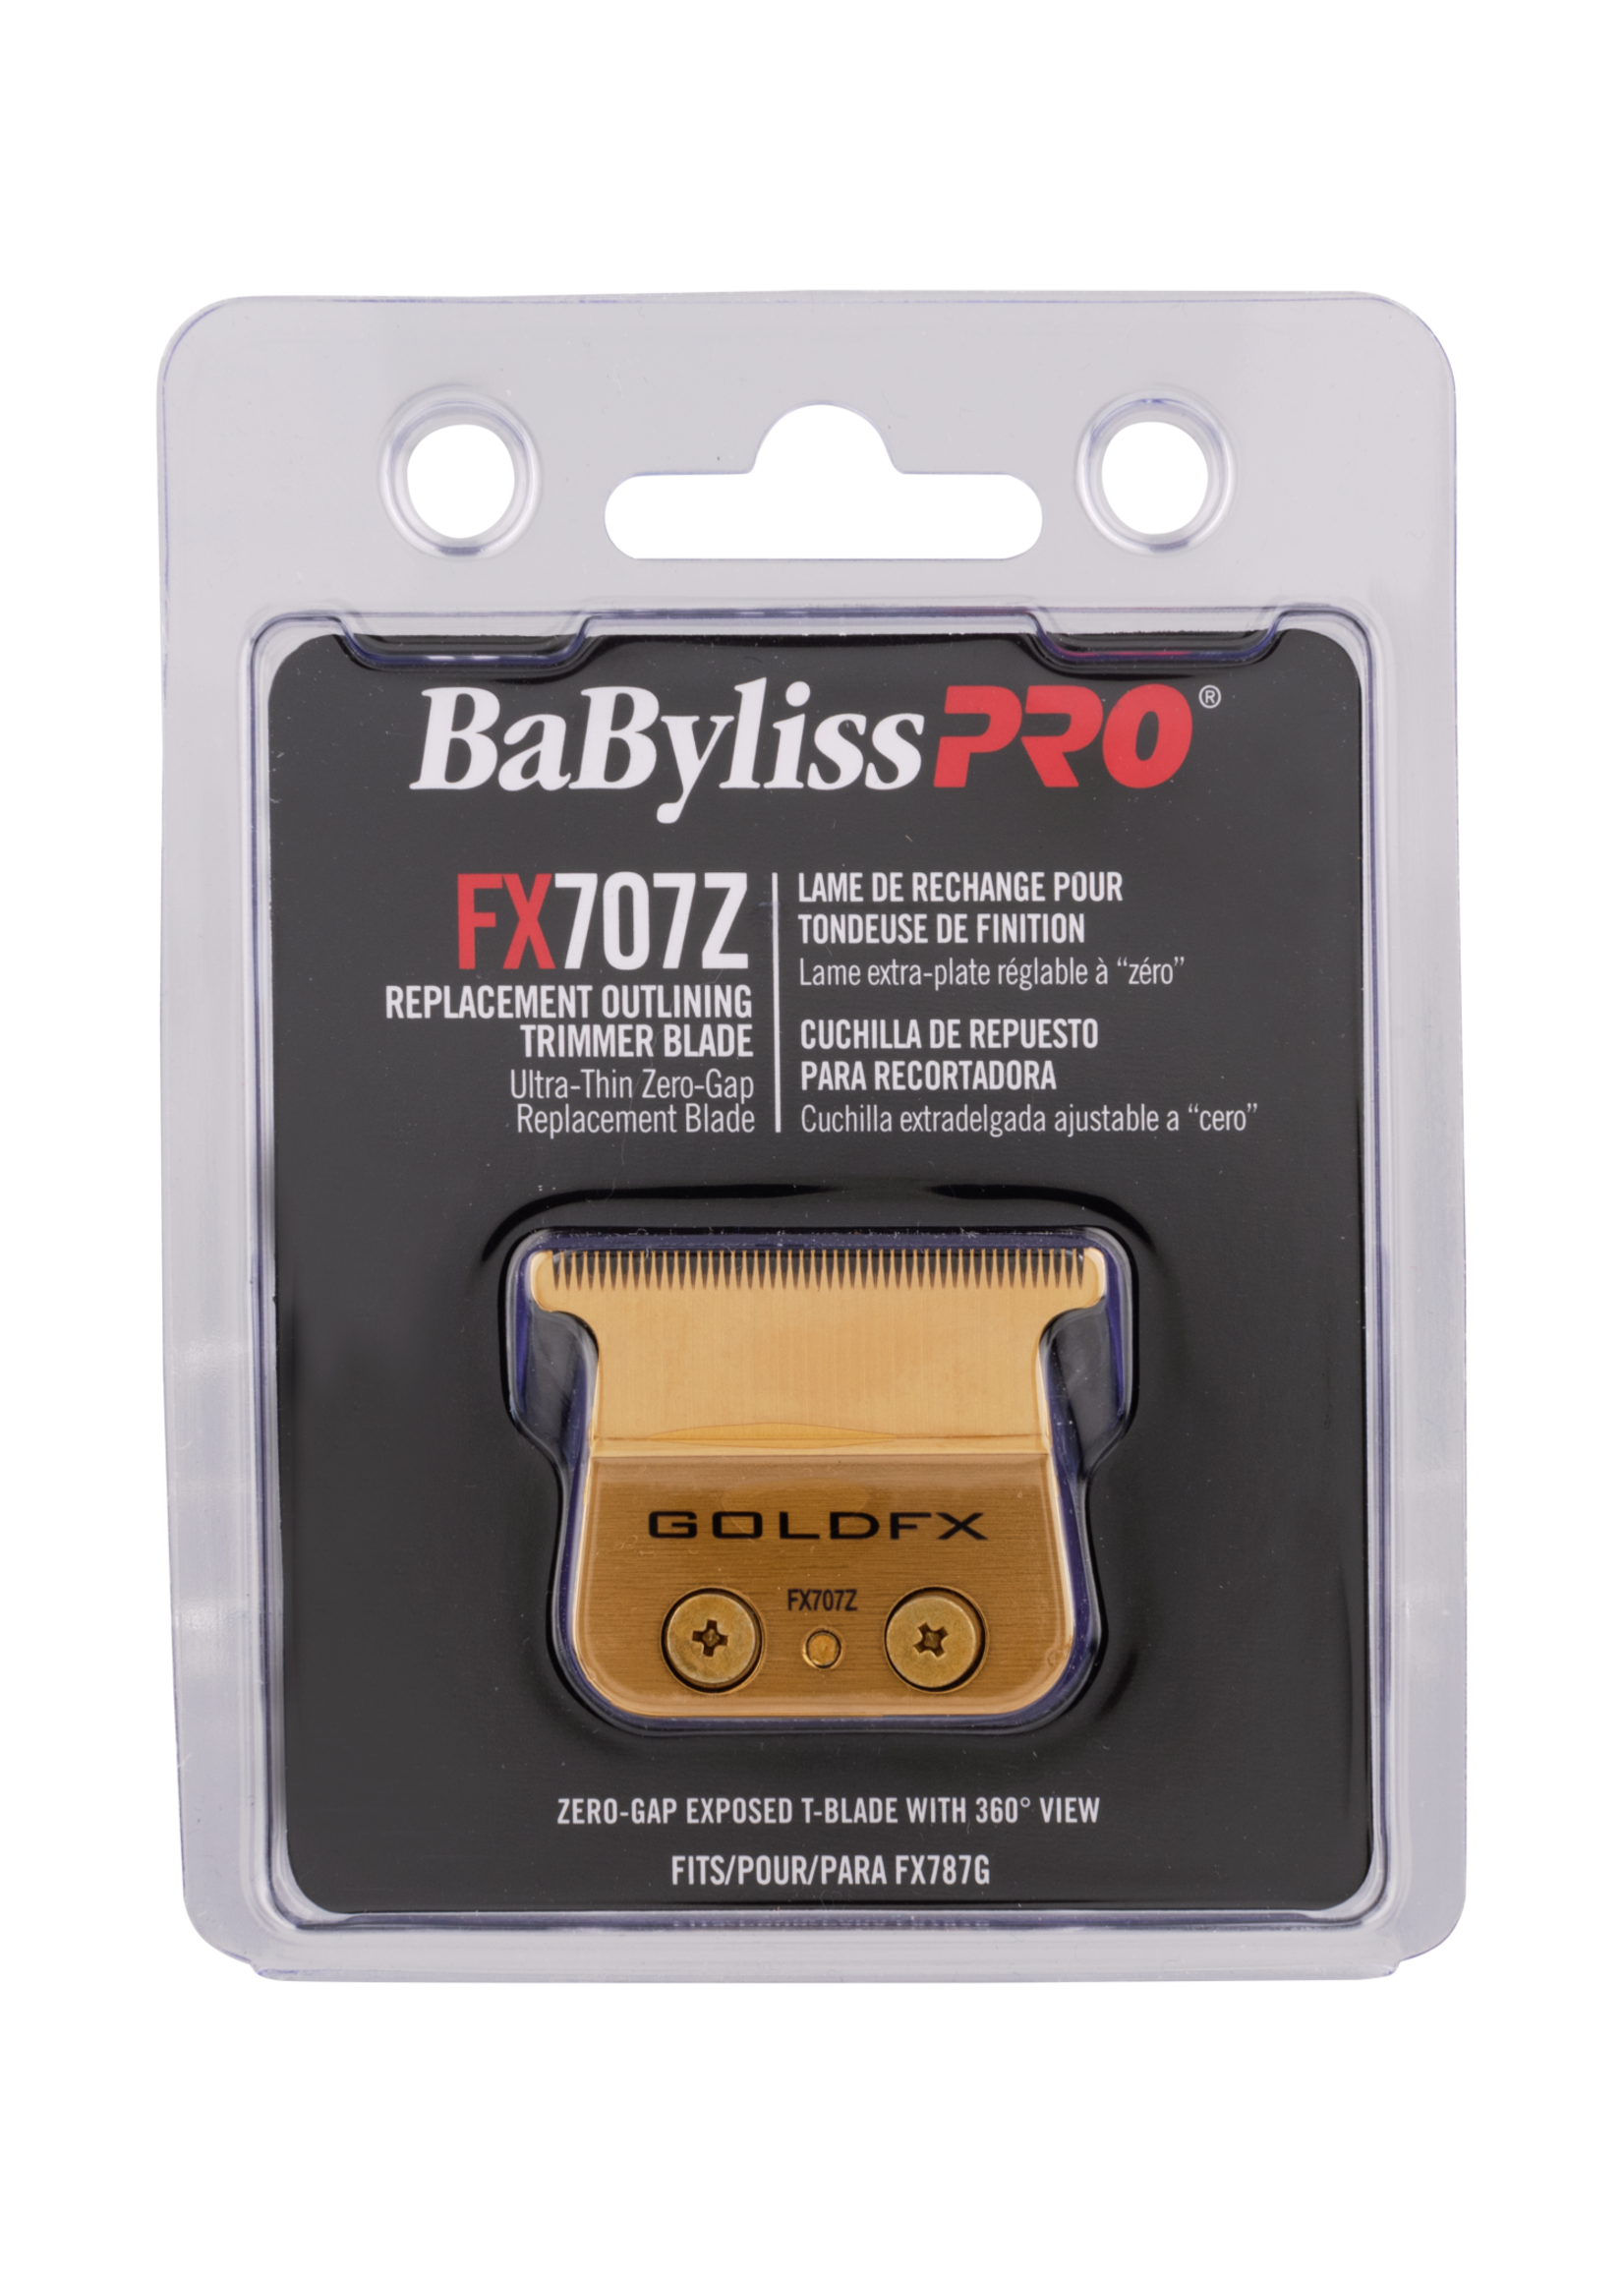 BabylissPRO BabylissPRO Replacement Outliner Hair Trimmer Blade Gold FX707Z